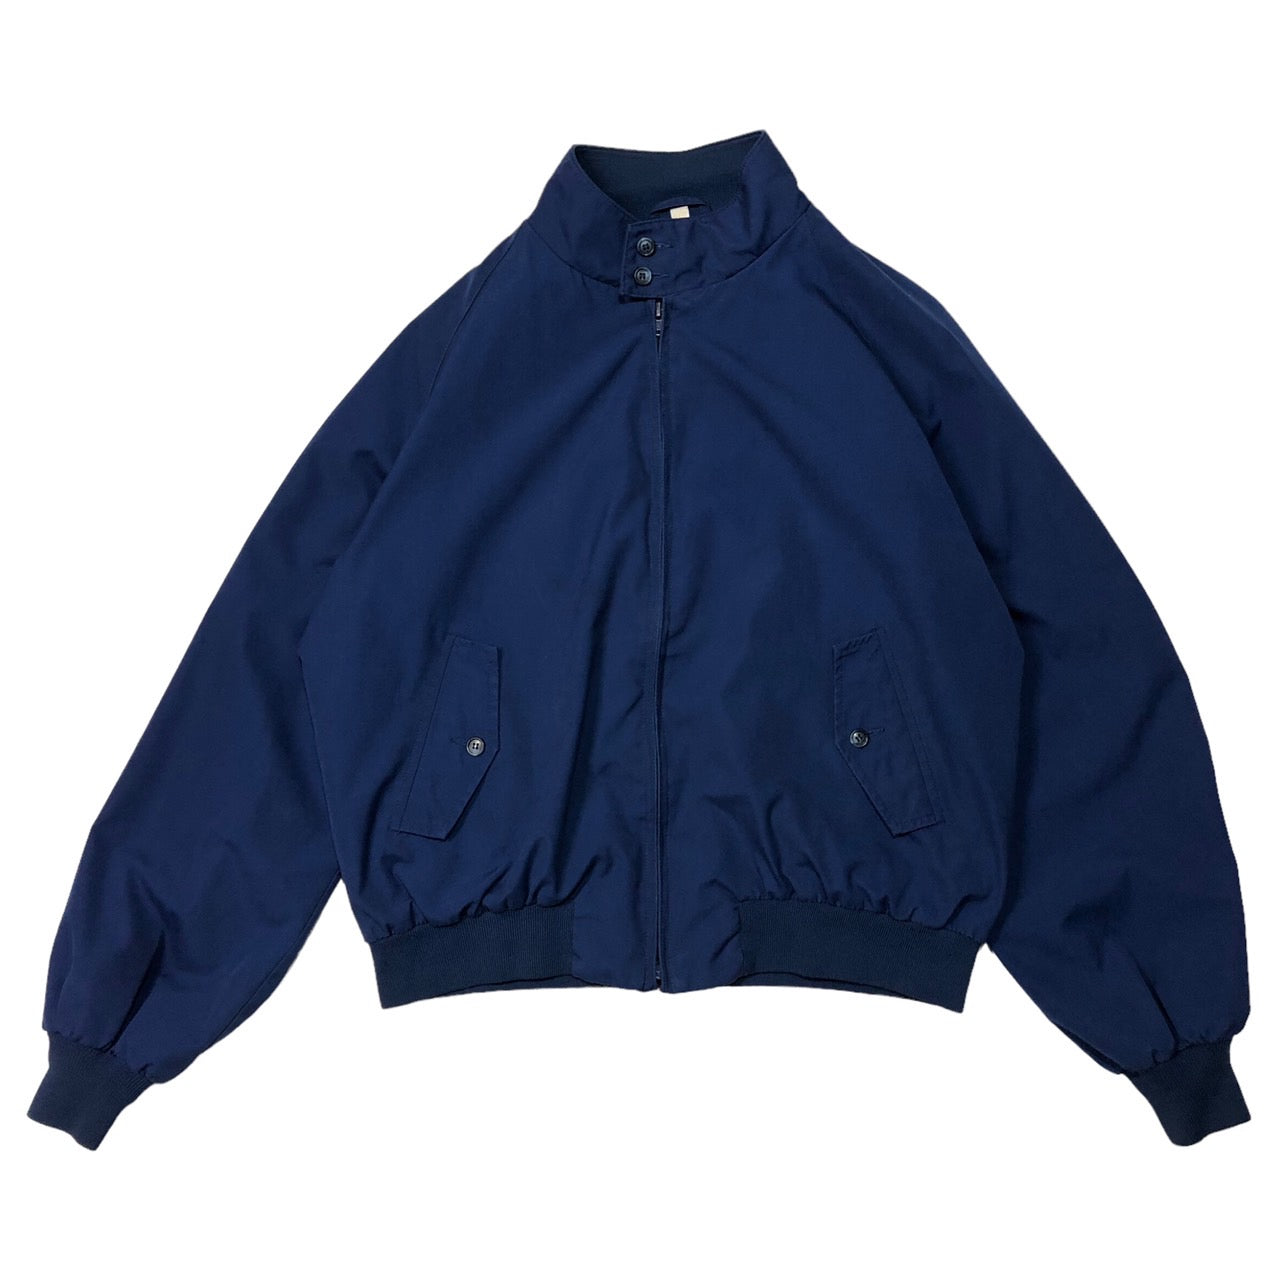 BARACUTA by VAN HEUSEN(バラクータバンヒューゼン) 80's G9 jacket ...